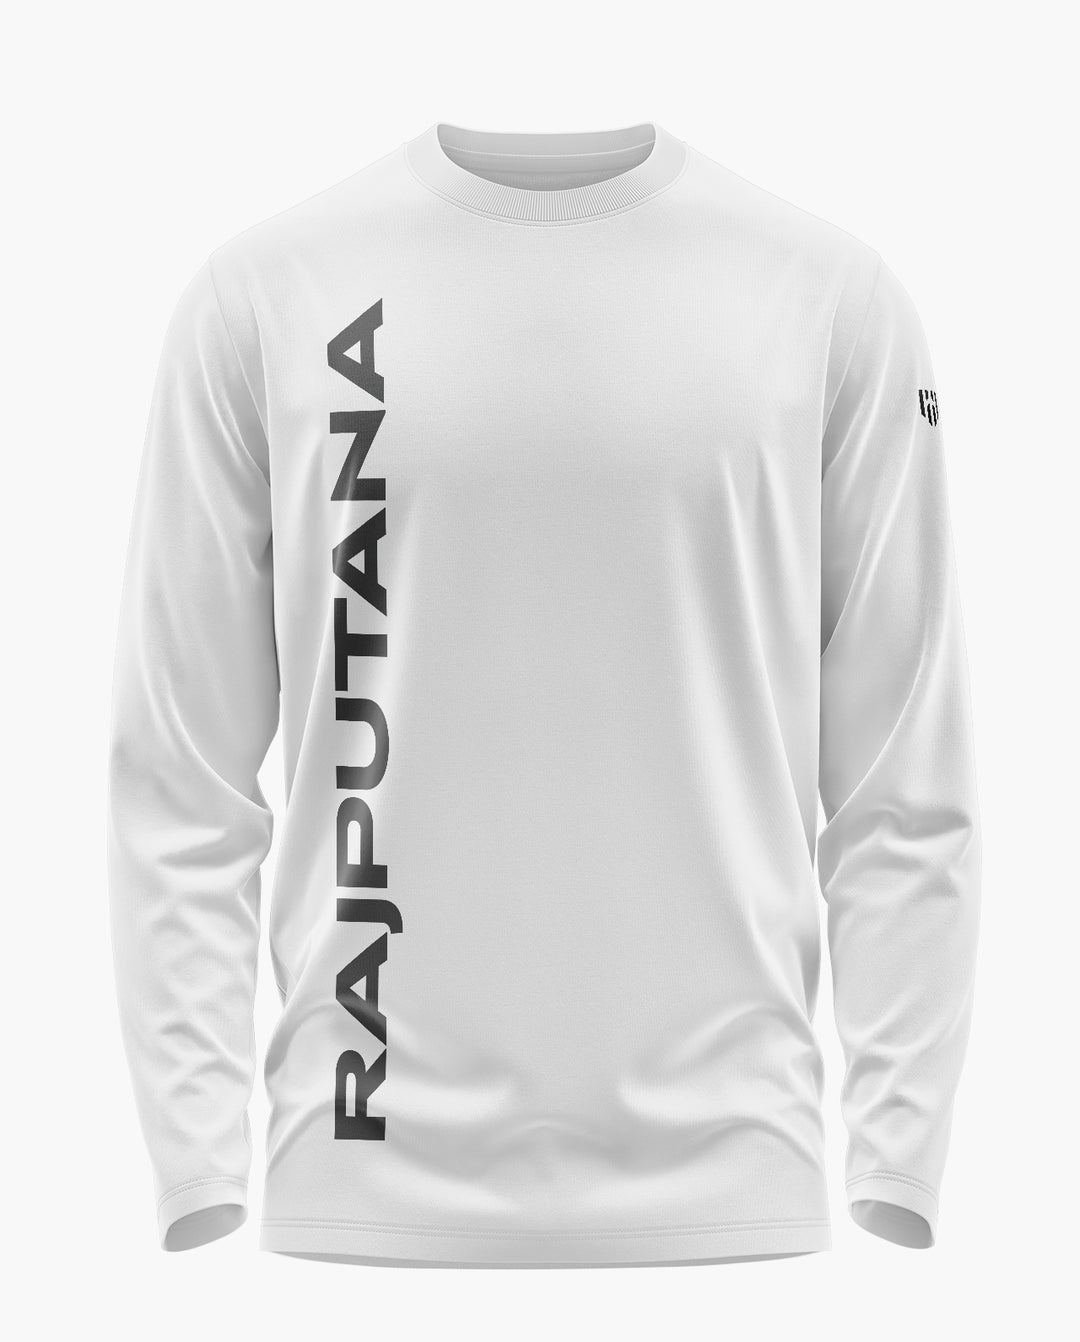 RAJPUTANA REGT. Full Sleeve T-Shirt